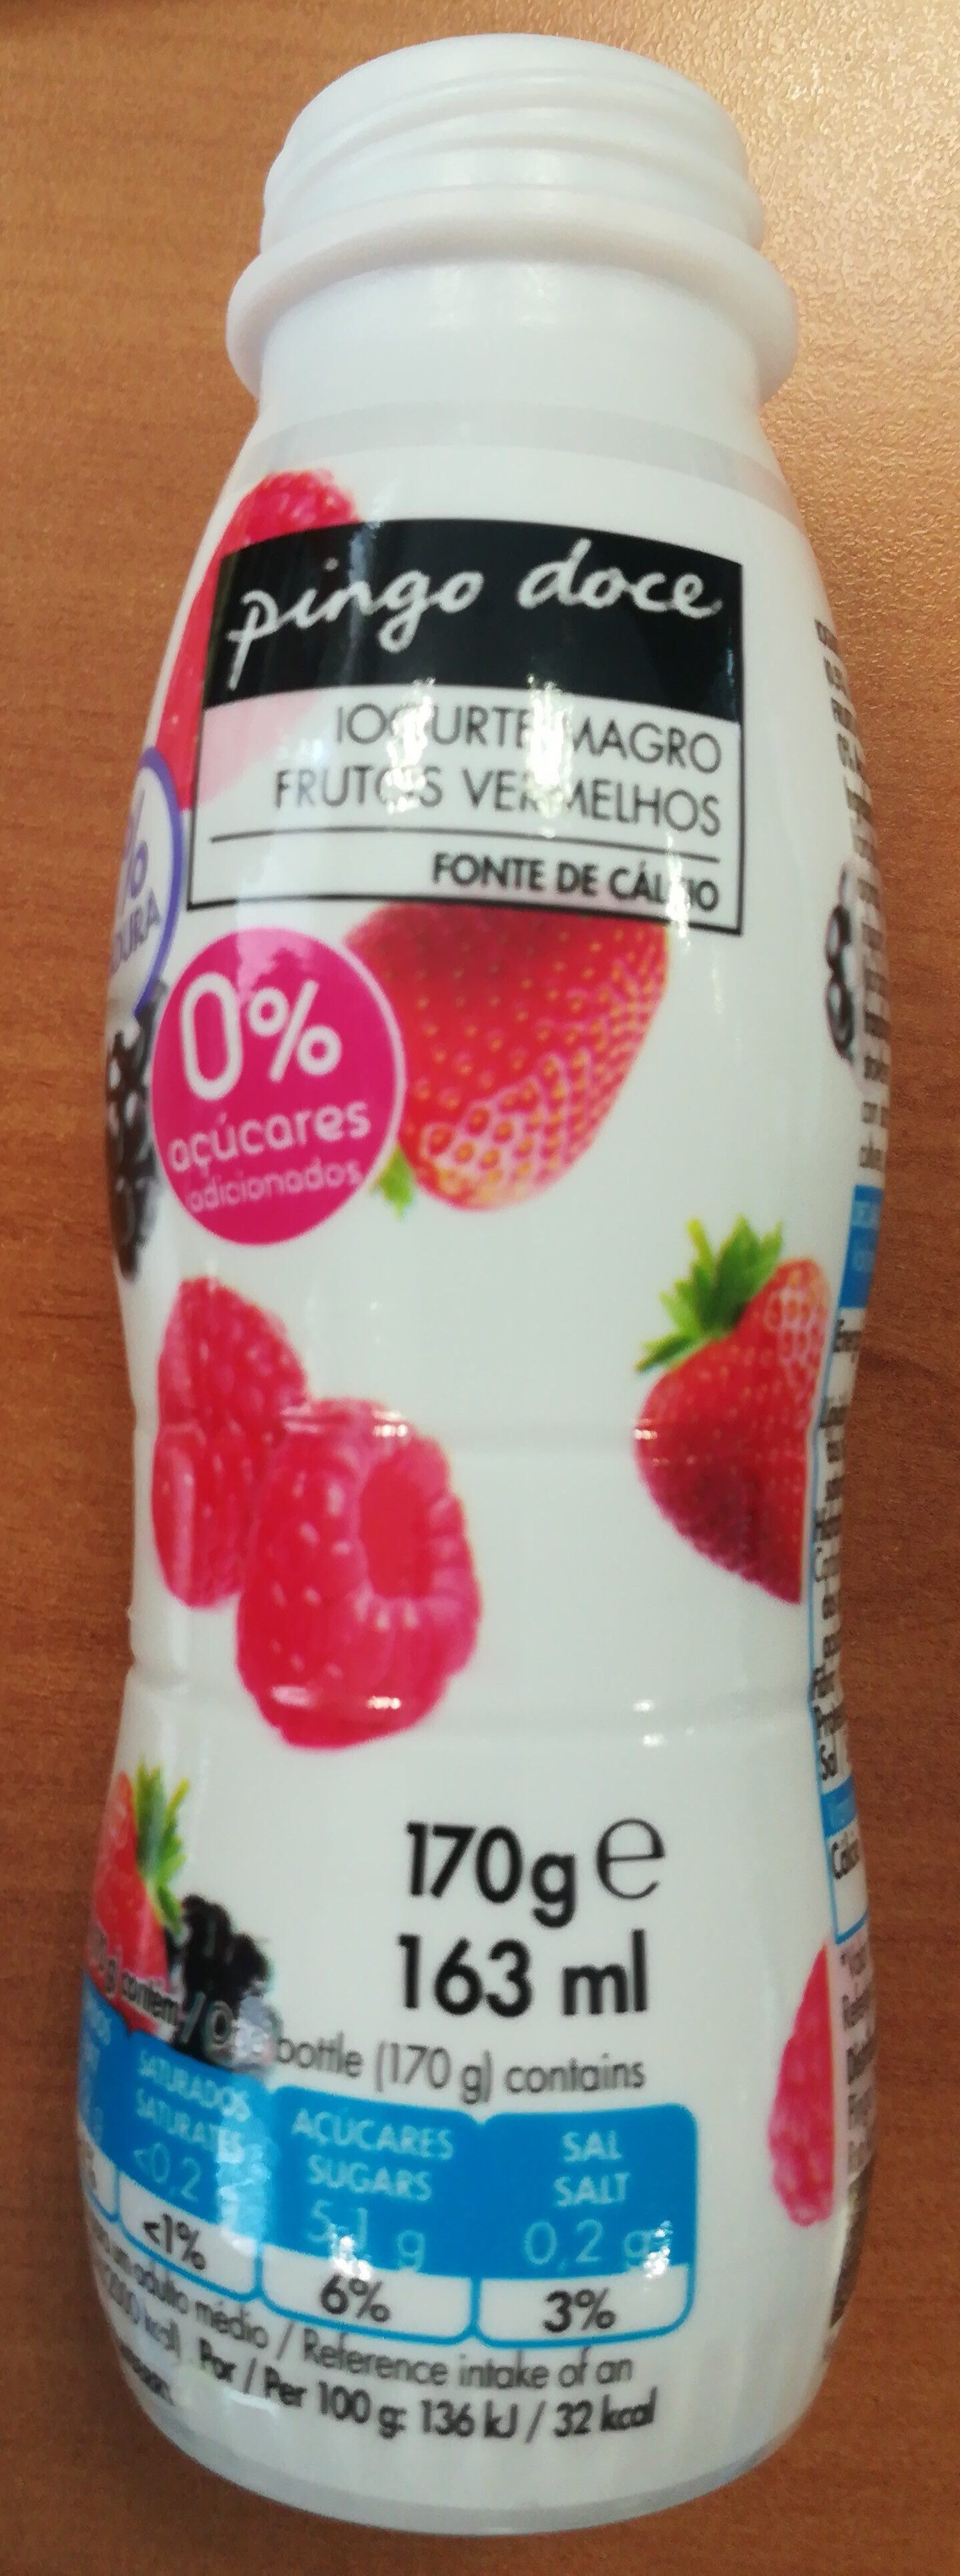 Iogurte magro - Produto